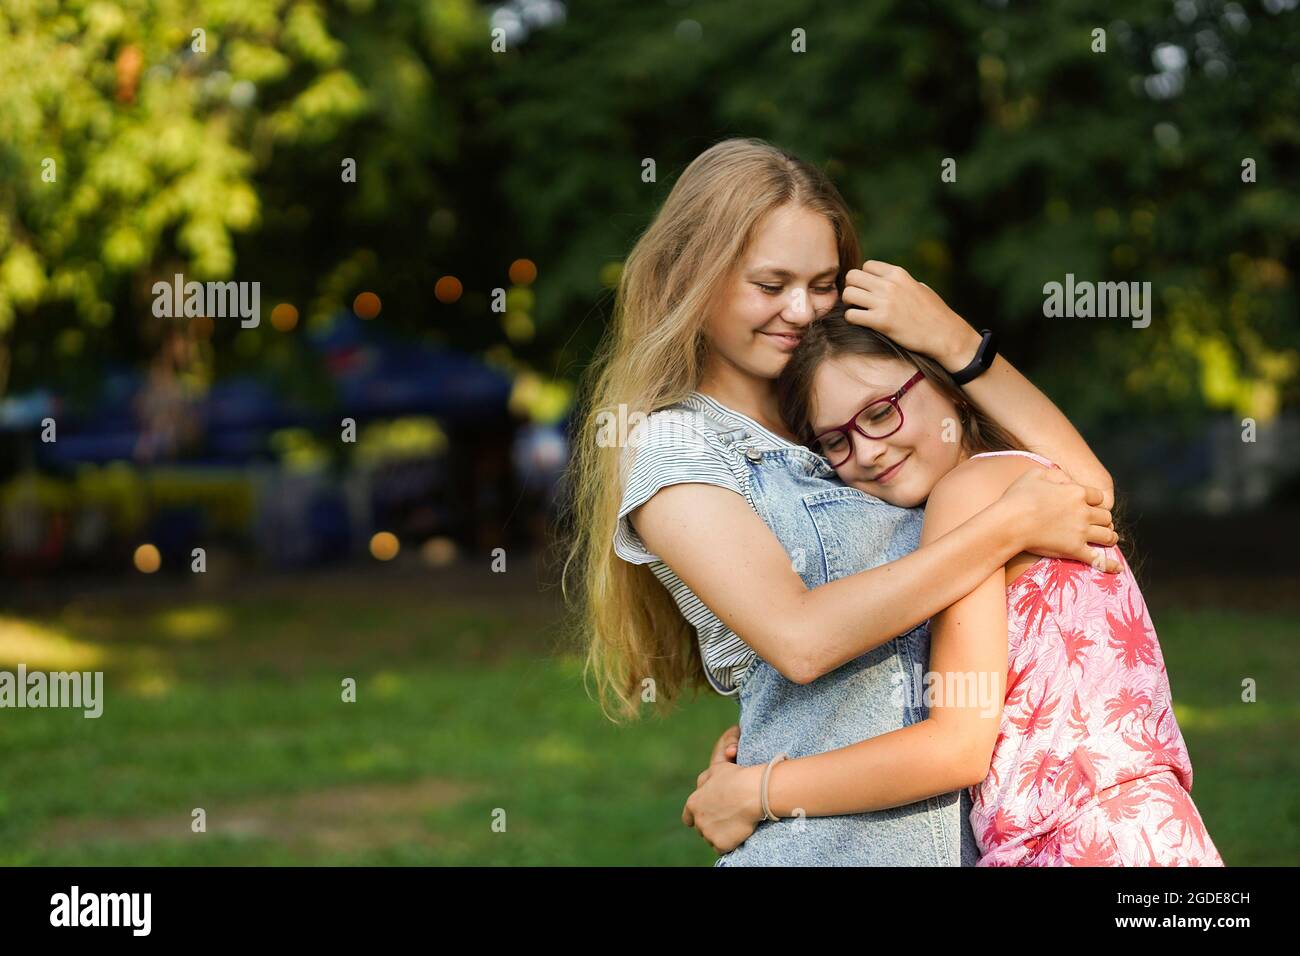 Little girl hugs her older sister. Love and friendship. Happy family concept. Stock Photo